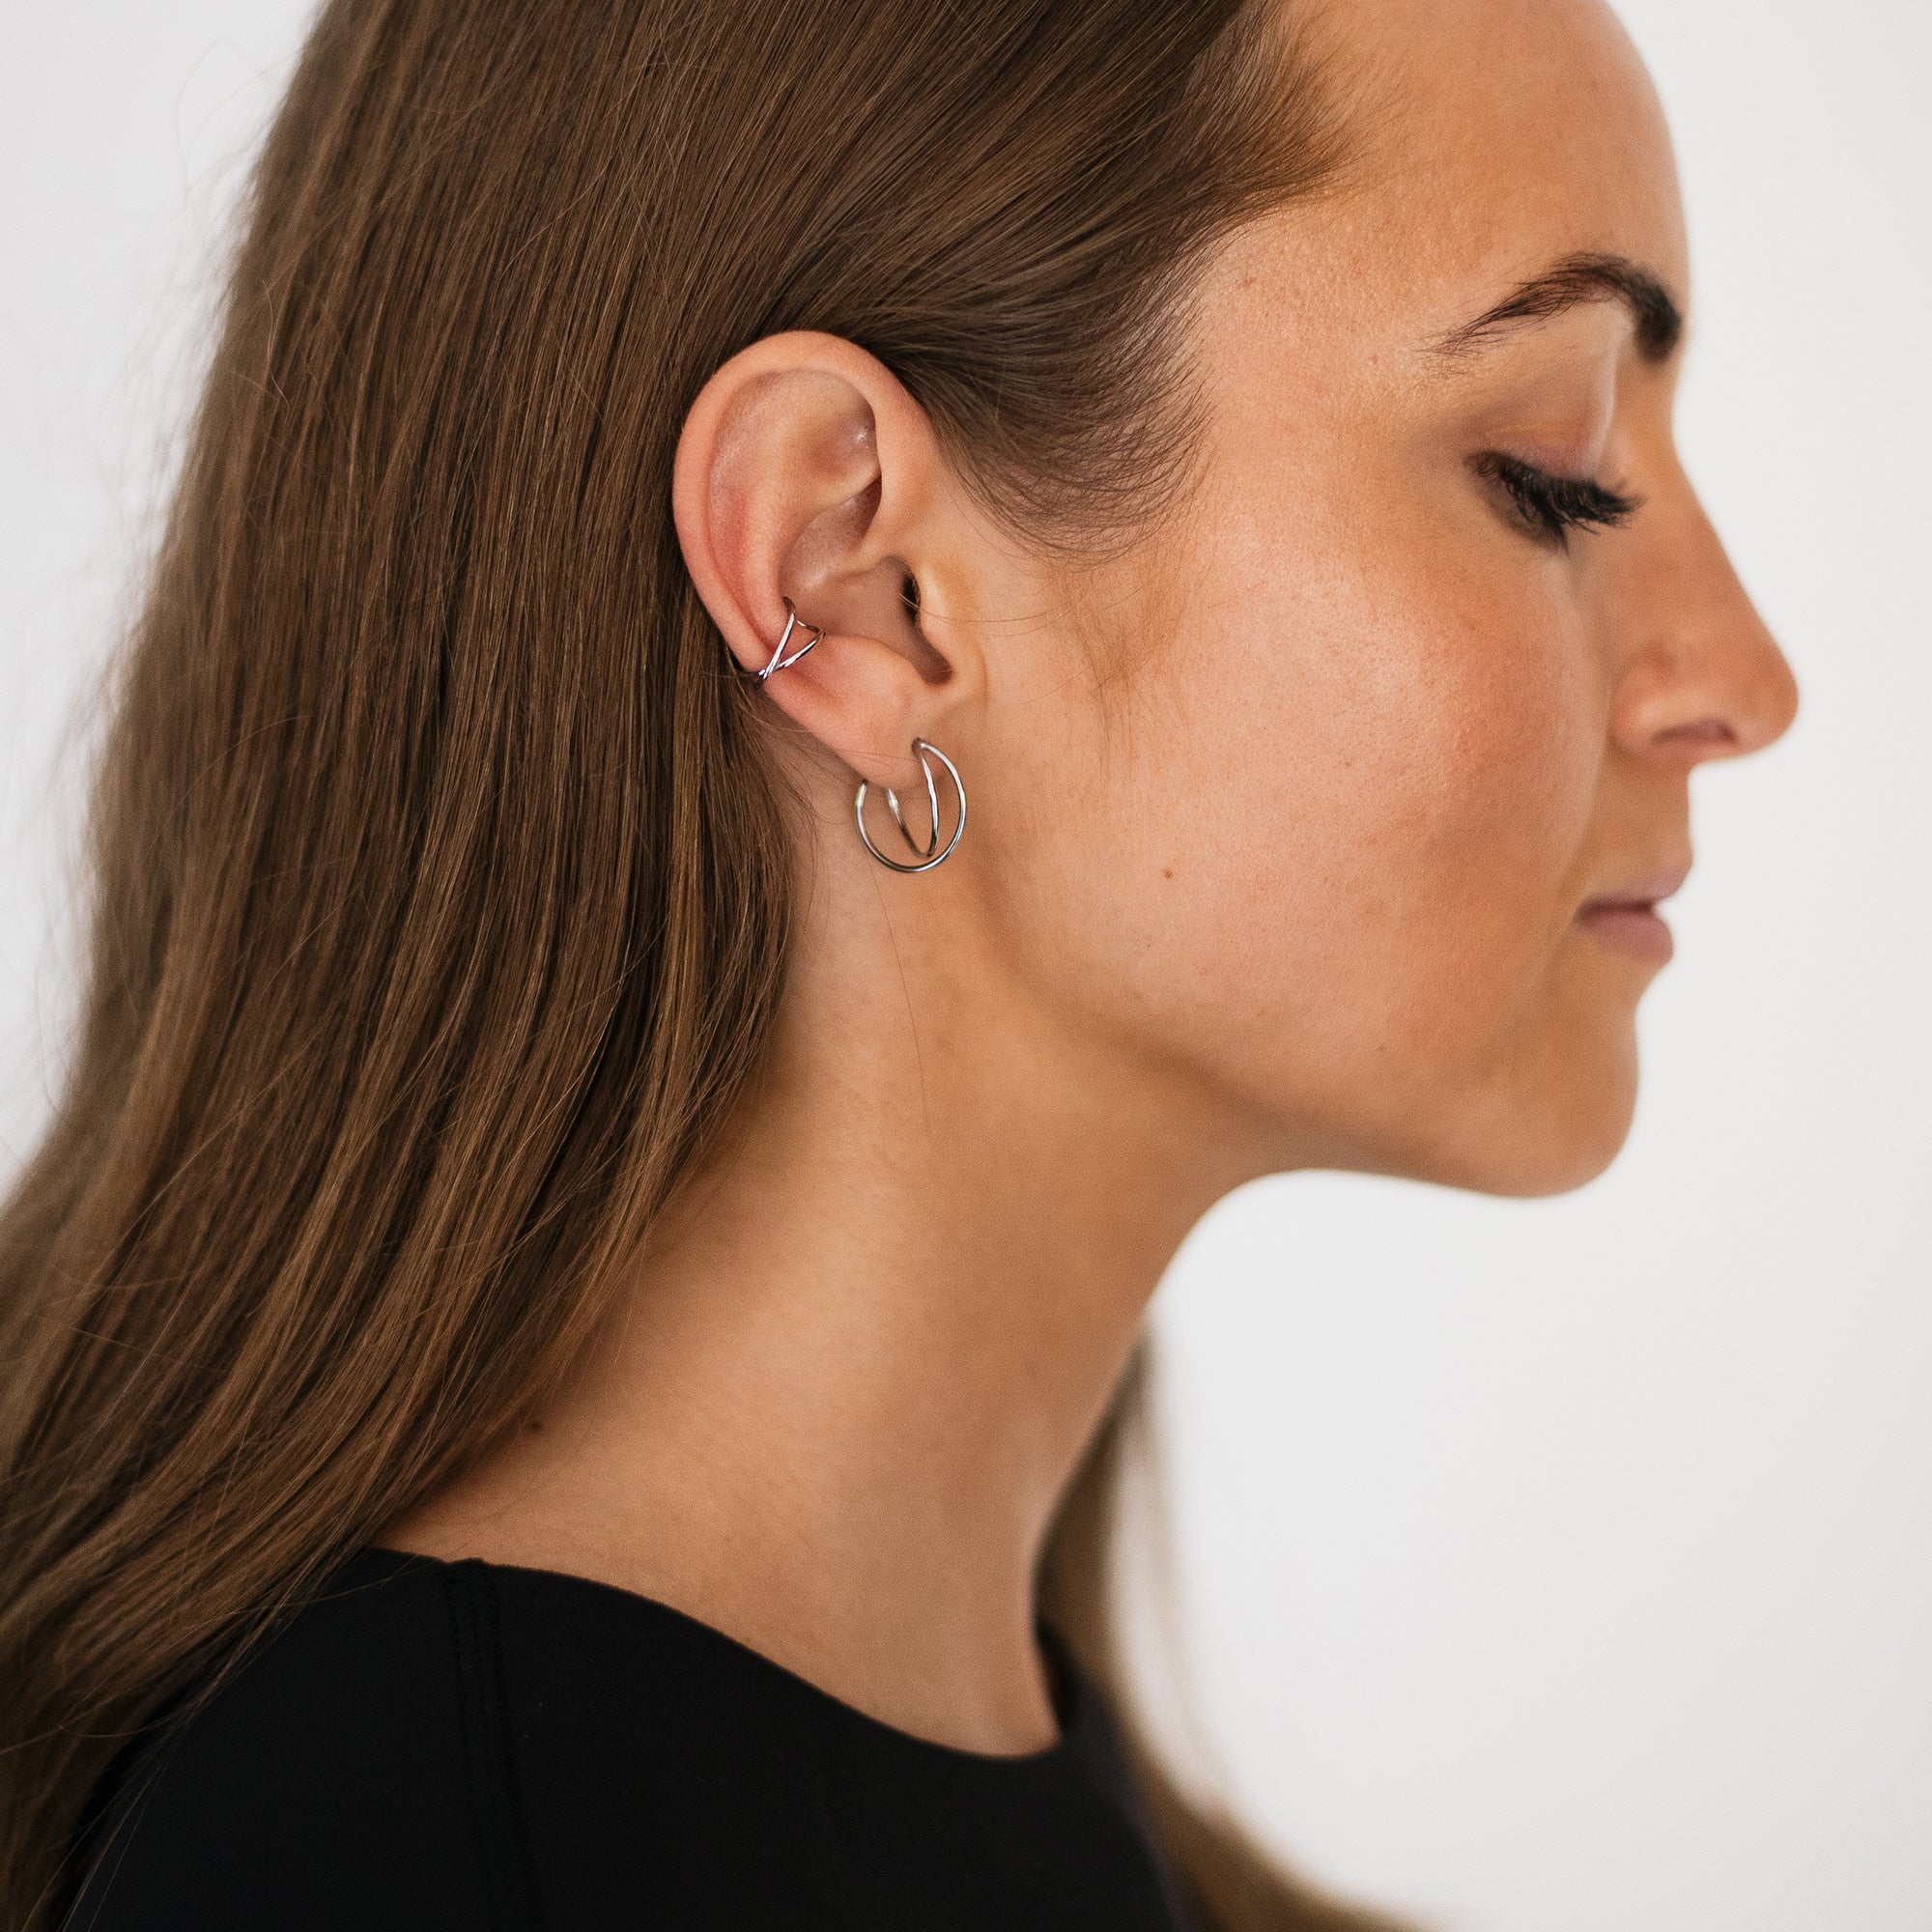 Jewelery set - Mia Earrings SMALL / Mia Earcuff - Silver plated